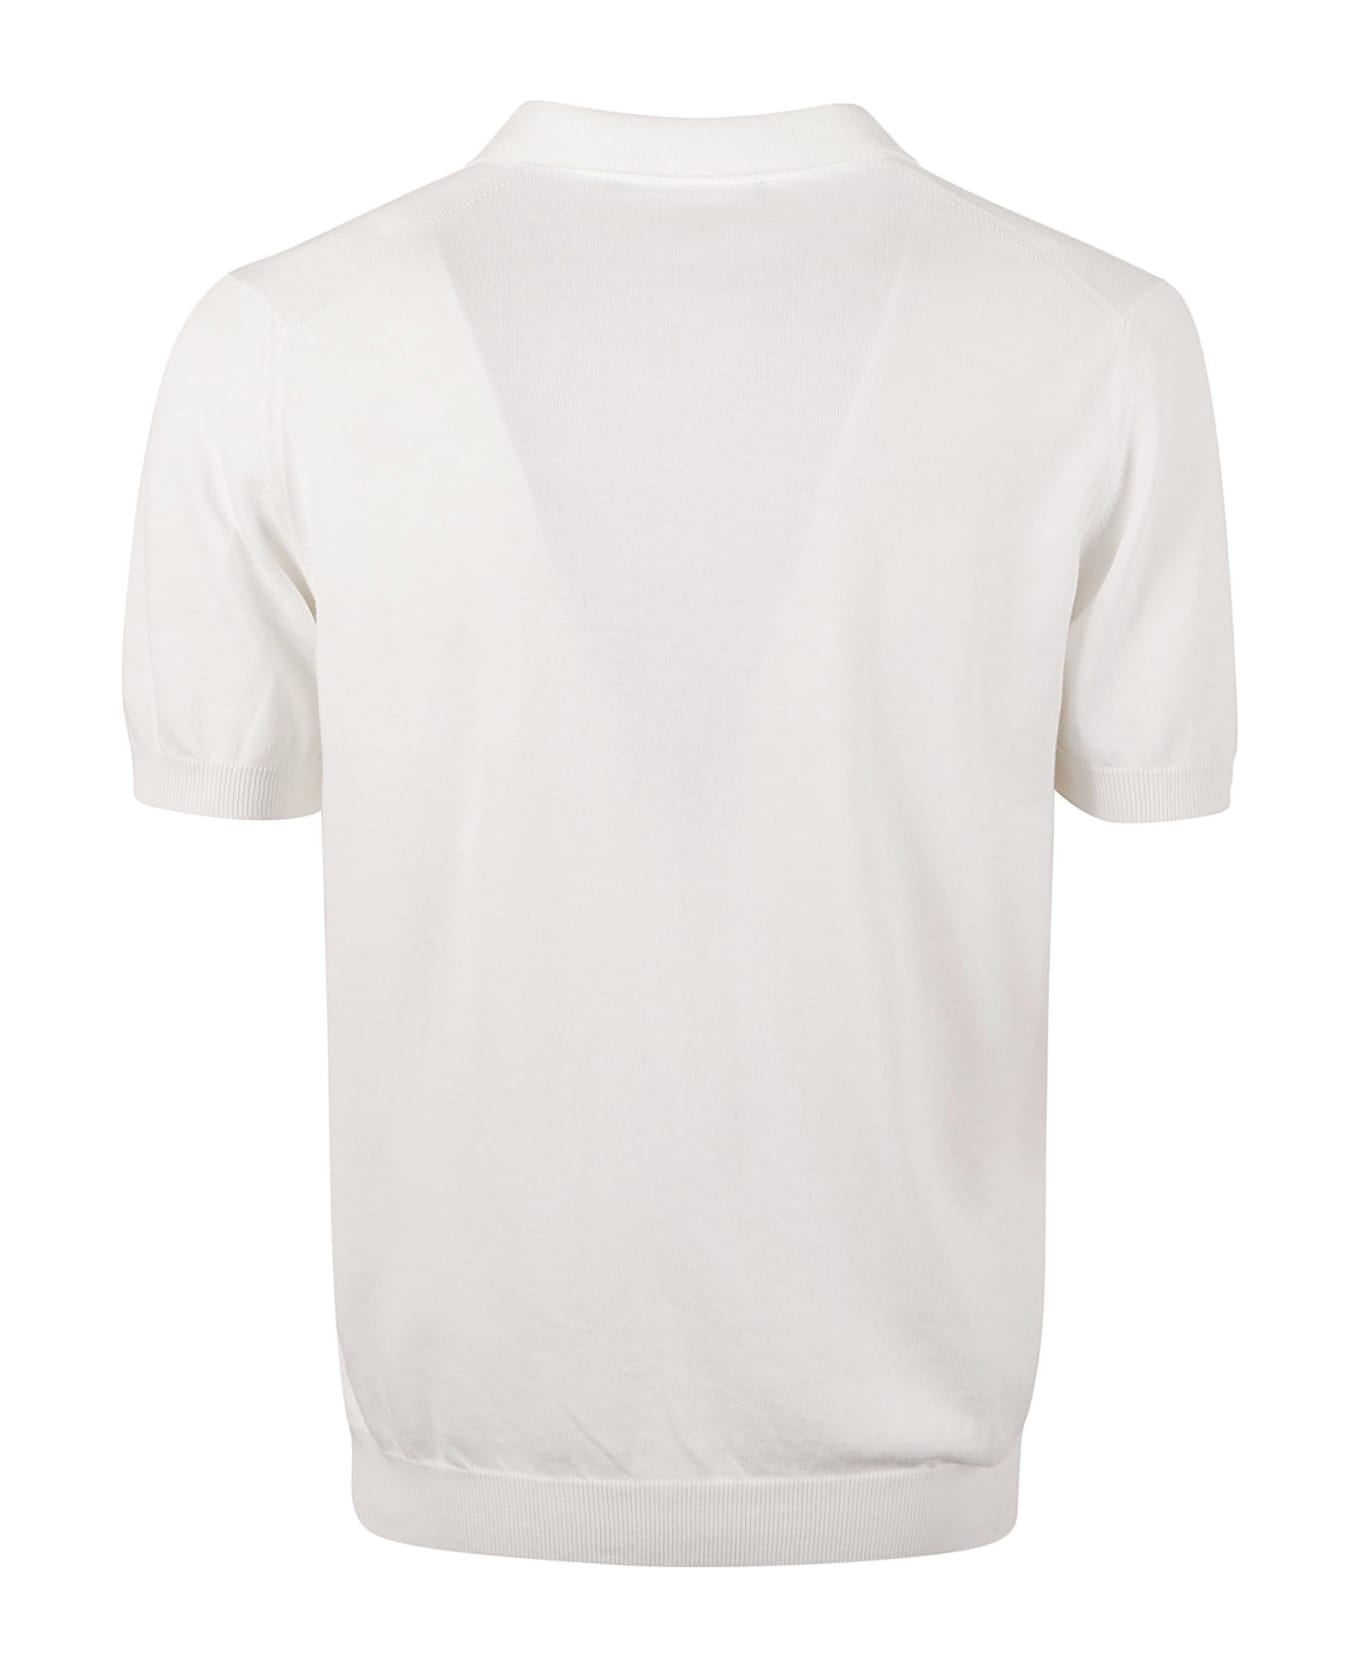 Tagliatore Button-less Placket Polo Shirt - White